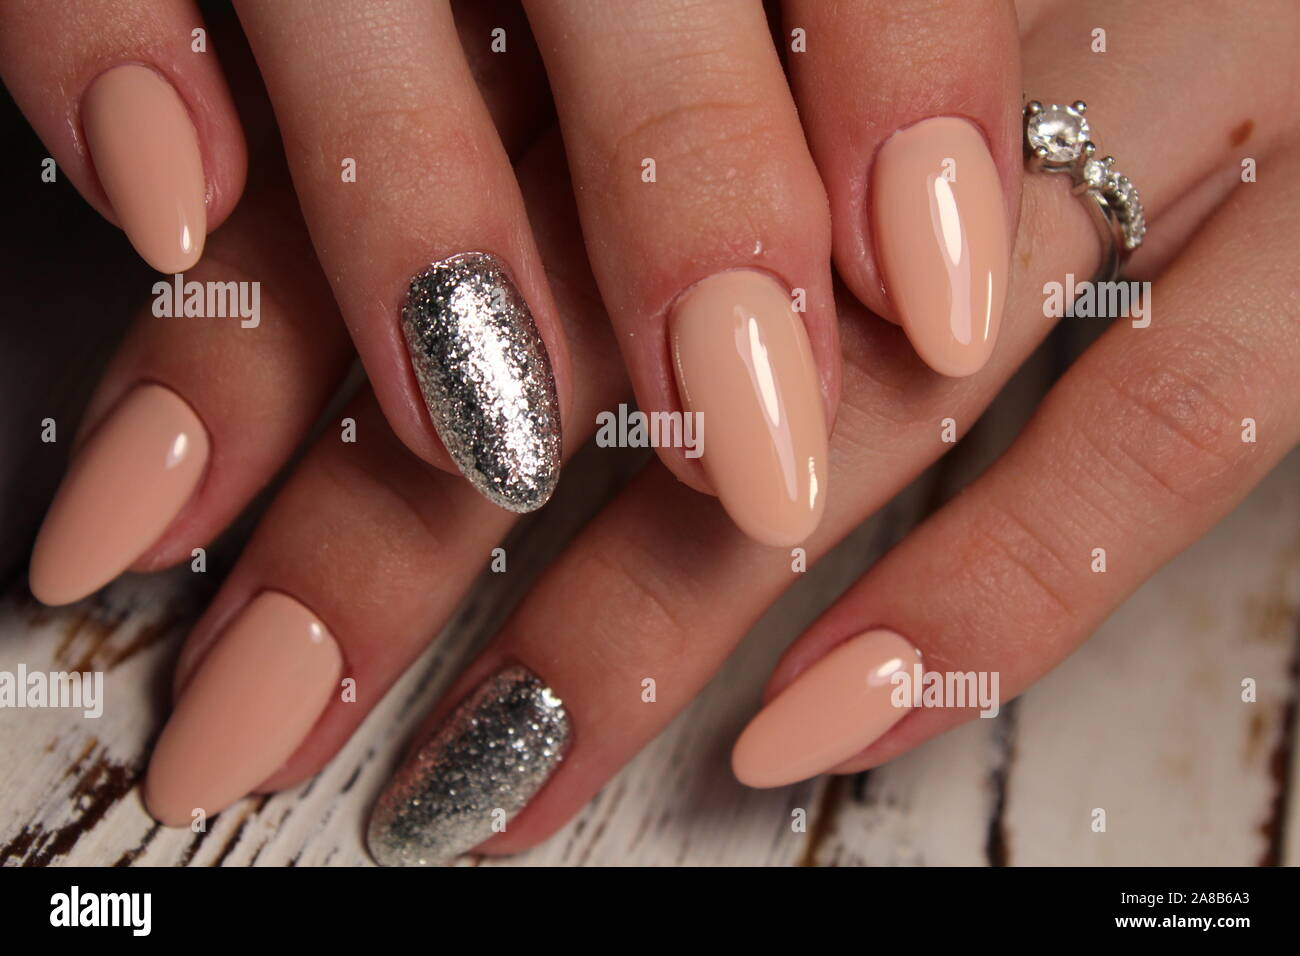 Review: Missha The Style nail polish Gem Stone - Ruby